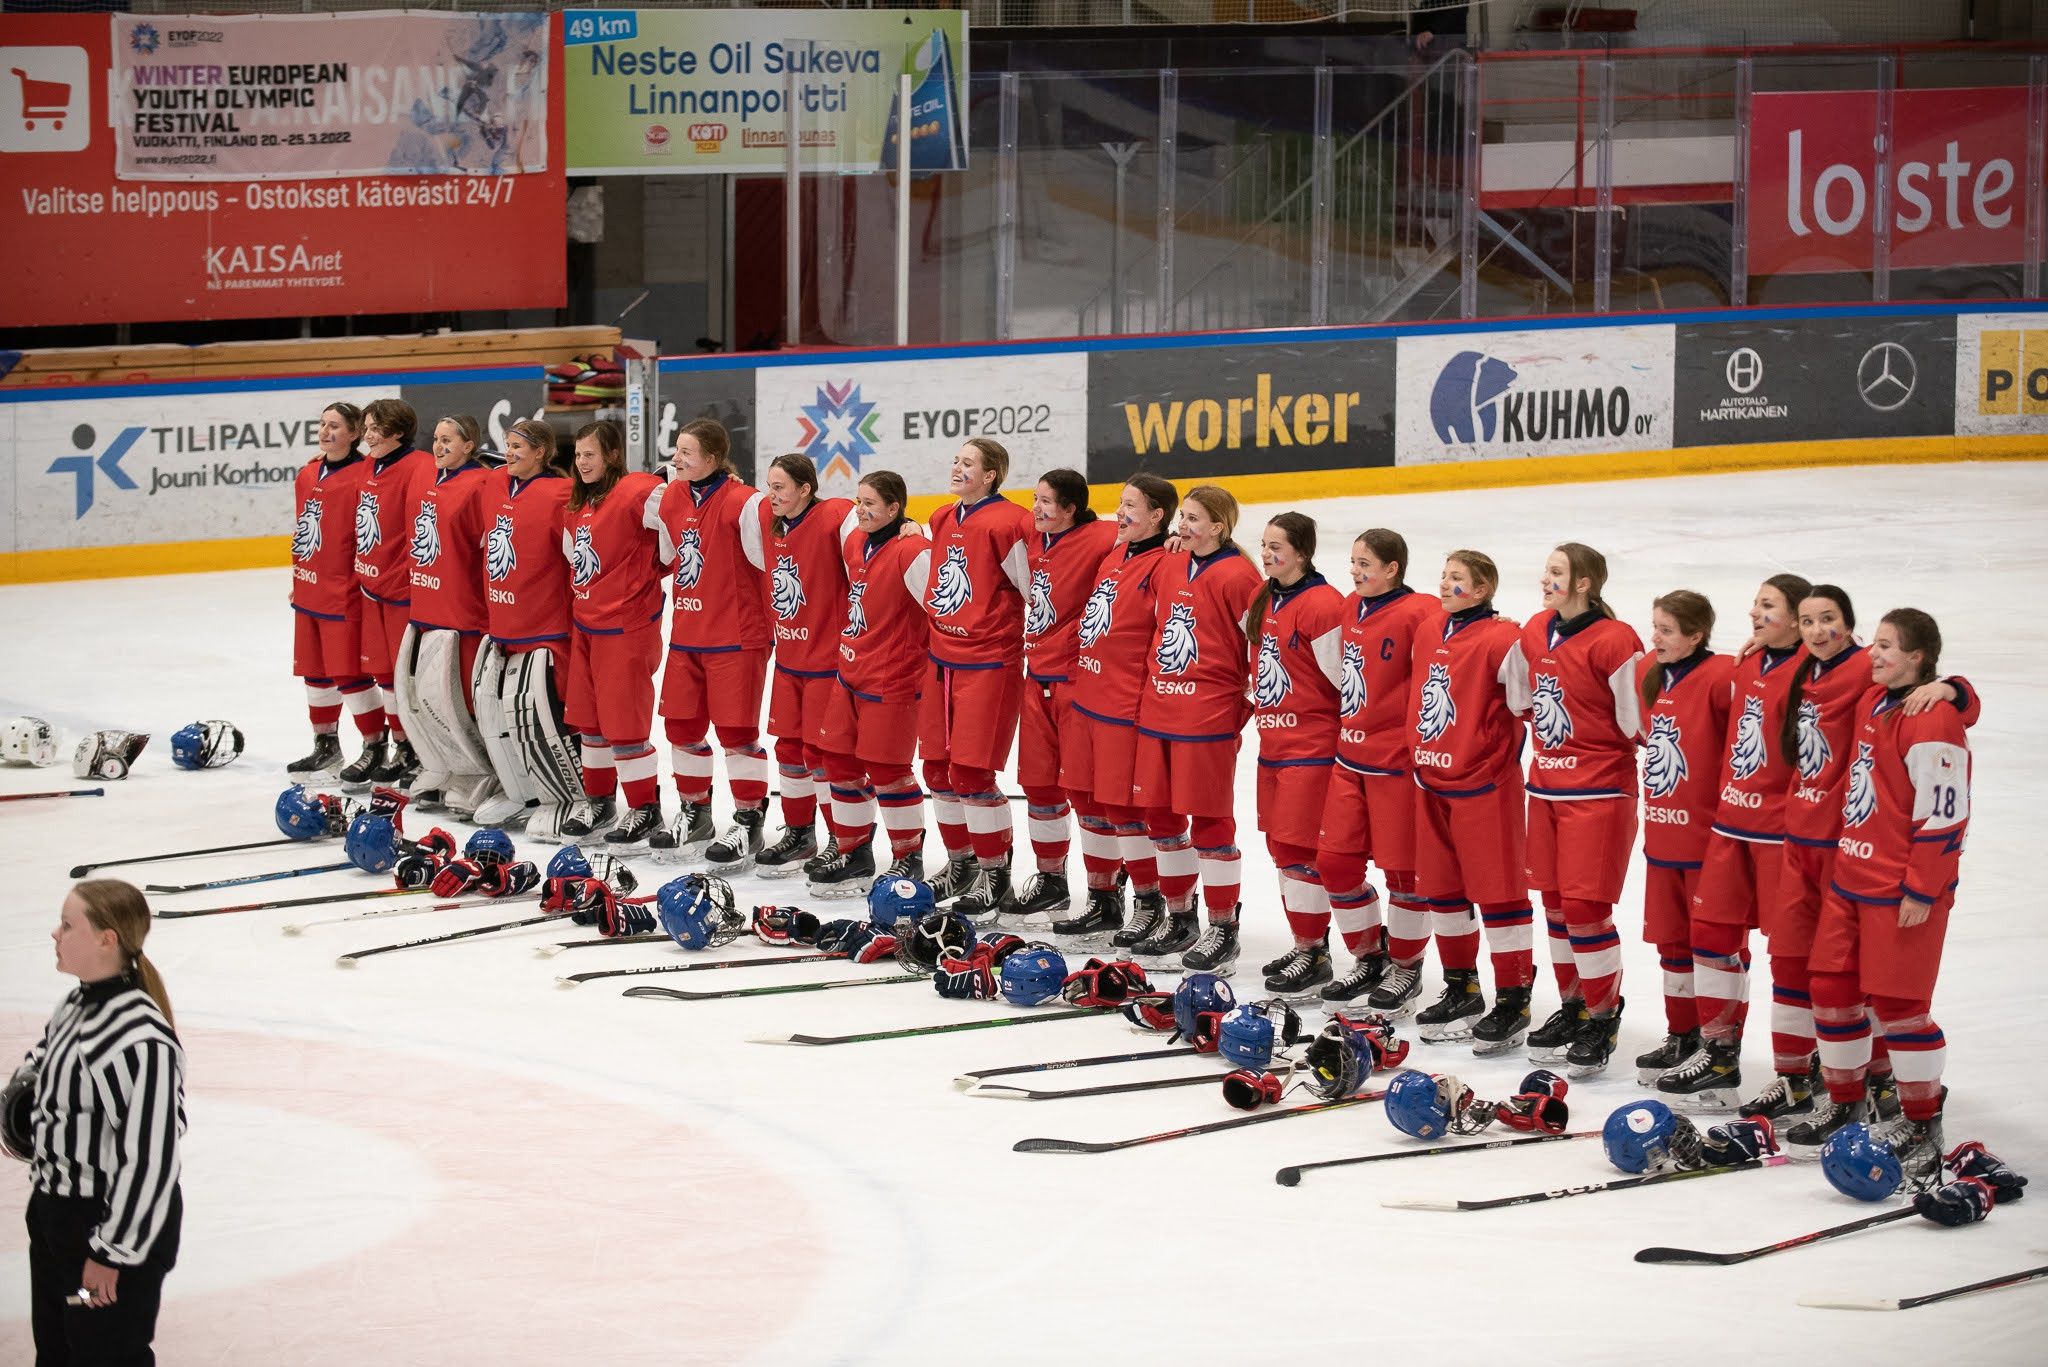 Czech Republic reached the girls' ice hockey final with a second Group A victory - 4-0 - against Hungary ©Hannu Kilpeläinen/EYOF 2022 Vuokatti